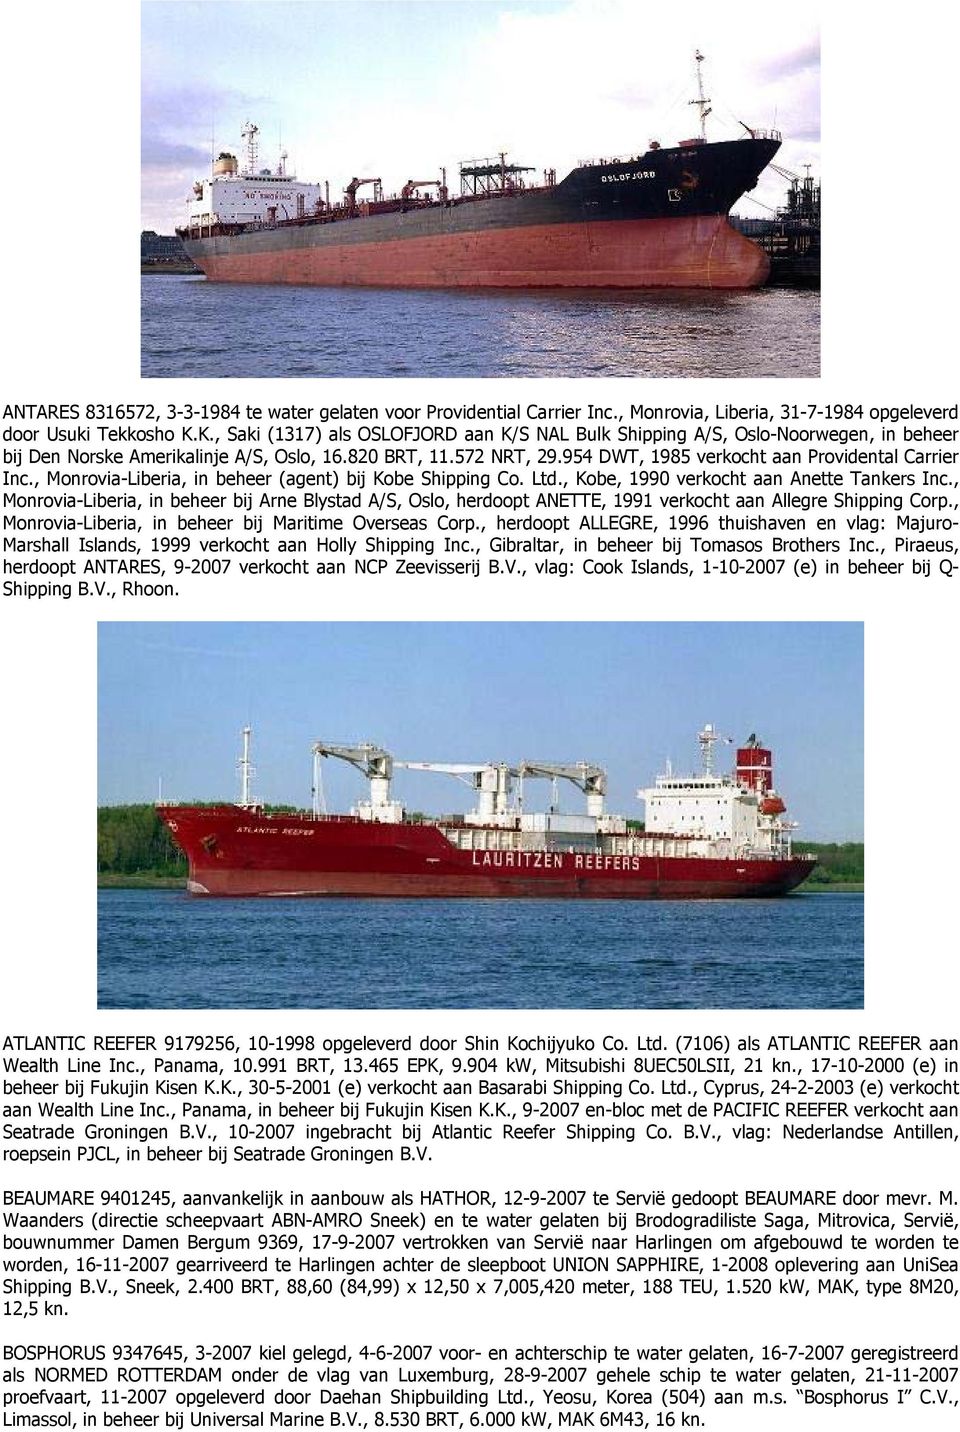 954 DWT, 1985 verkocht aan Providental Carrier Inc., Monrovia-Liberia, in beheer (agent) bij Kobe Shipping Co. Ltd., Kobe, 1990 verkocht aan Anette Tankers Inc.